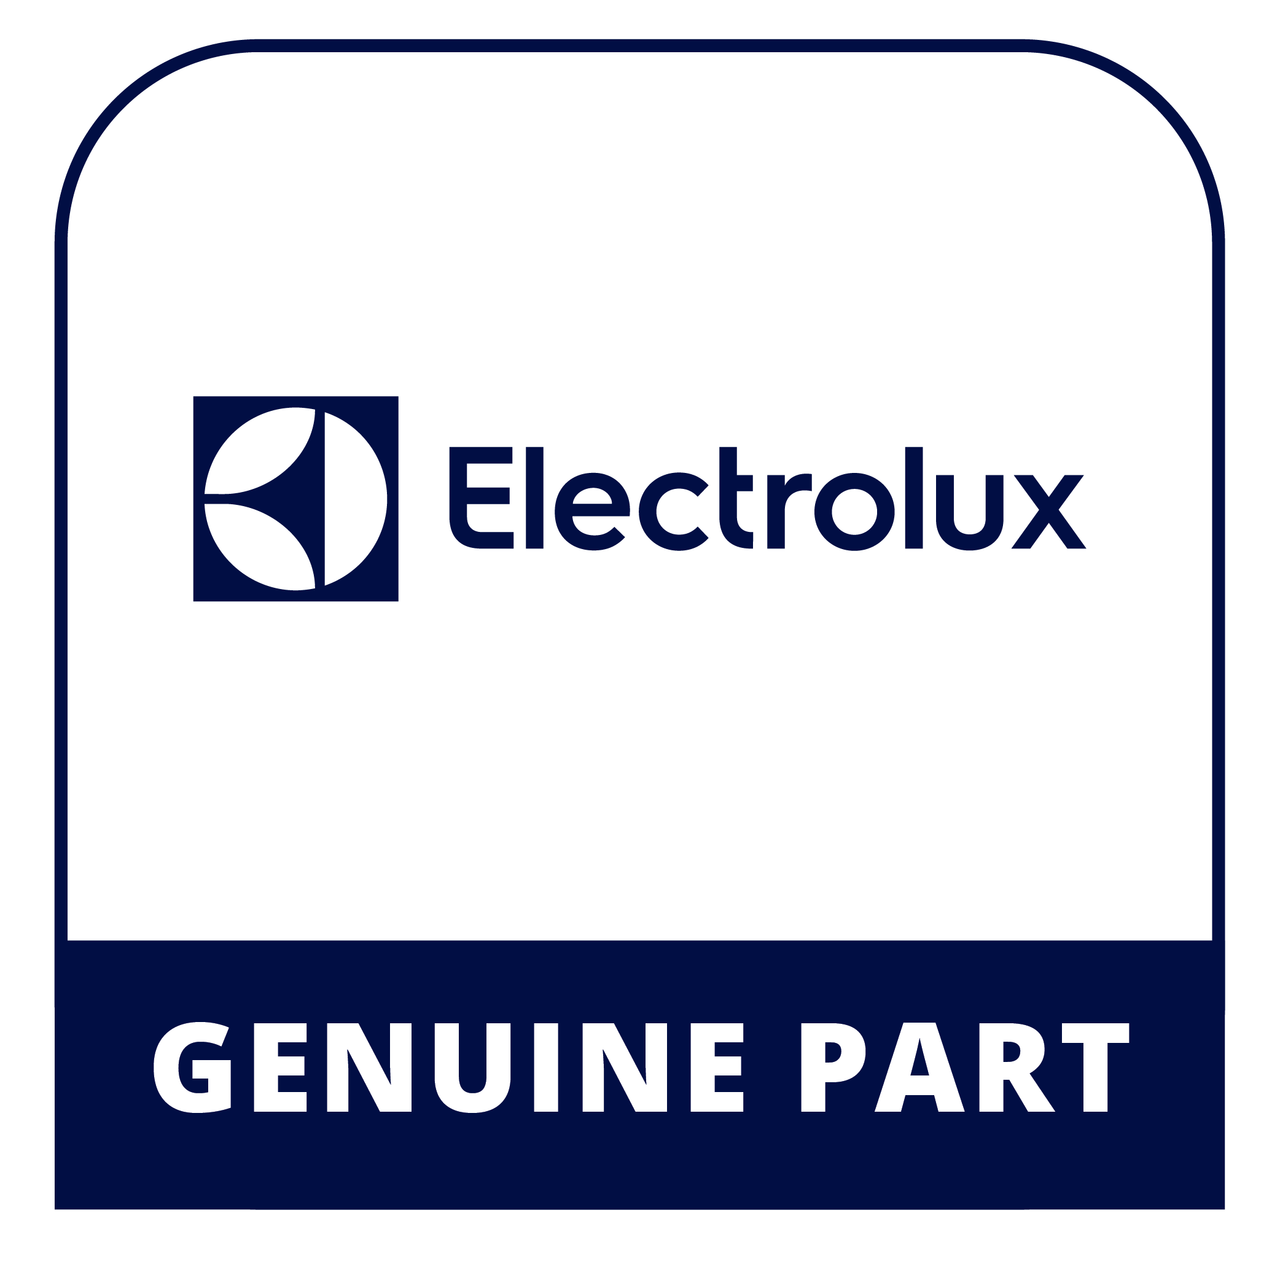 Frigidaire - Electrolux 5304491624 Handle - Genuine Electrolux Part